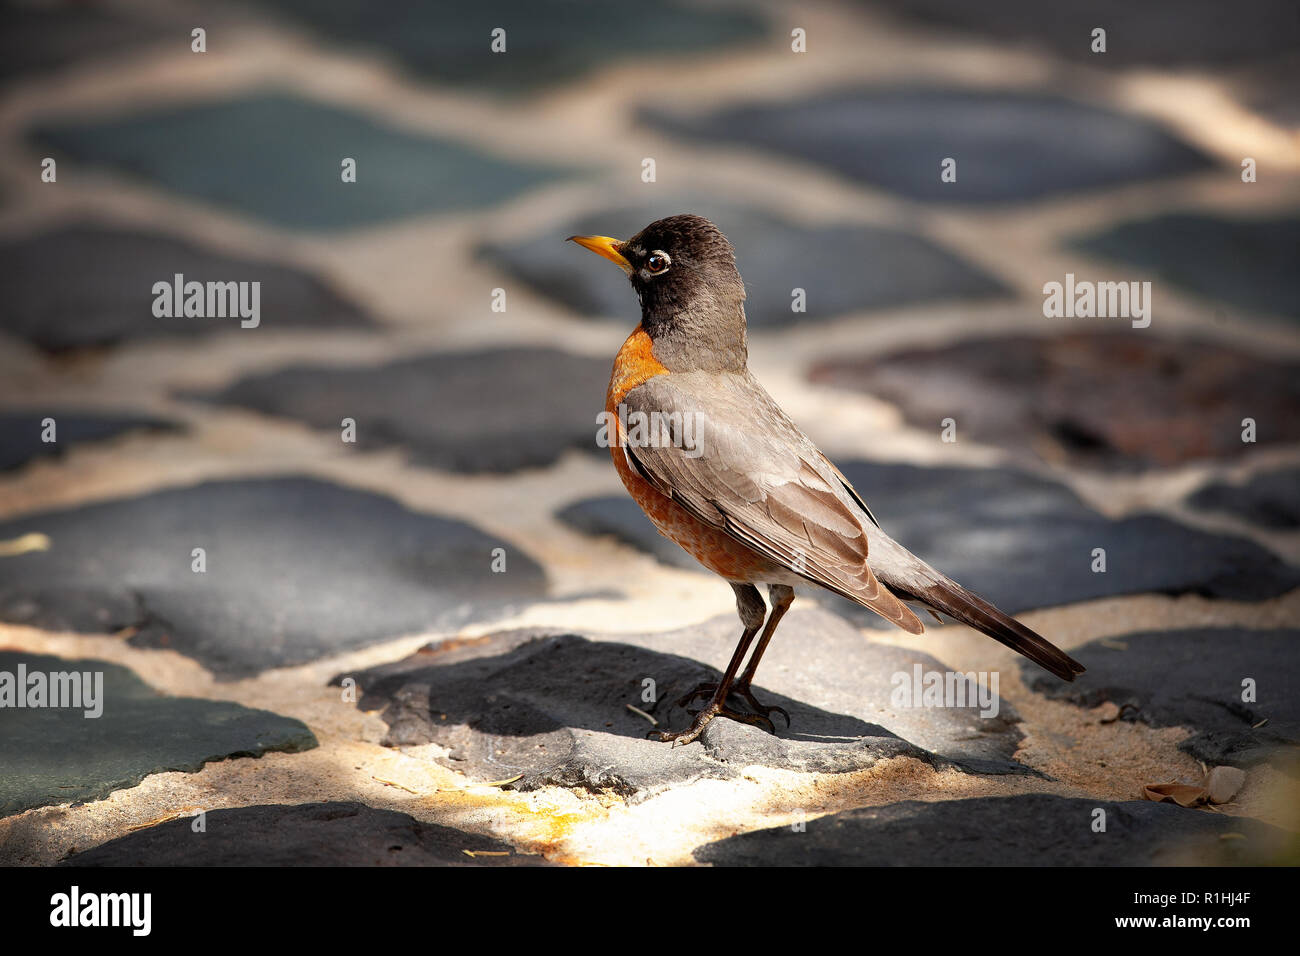 The American robin (Turdus migratorius) in Santa Barbara, California, USA Stock Photo